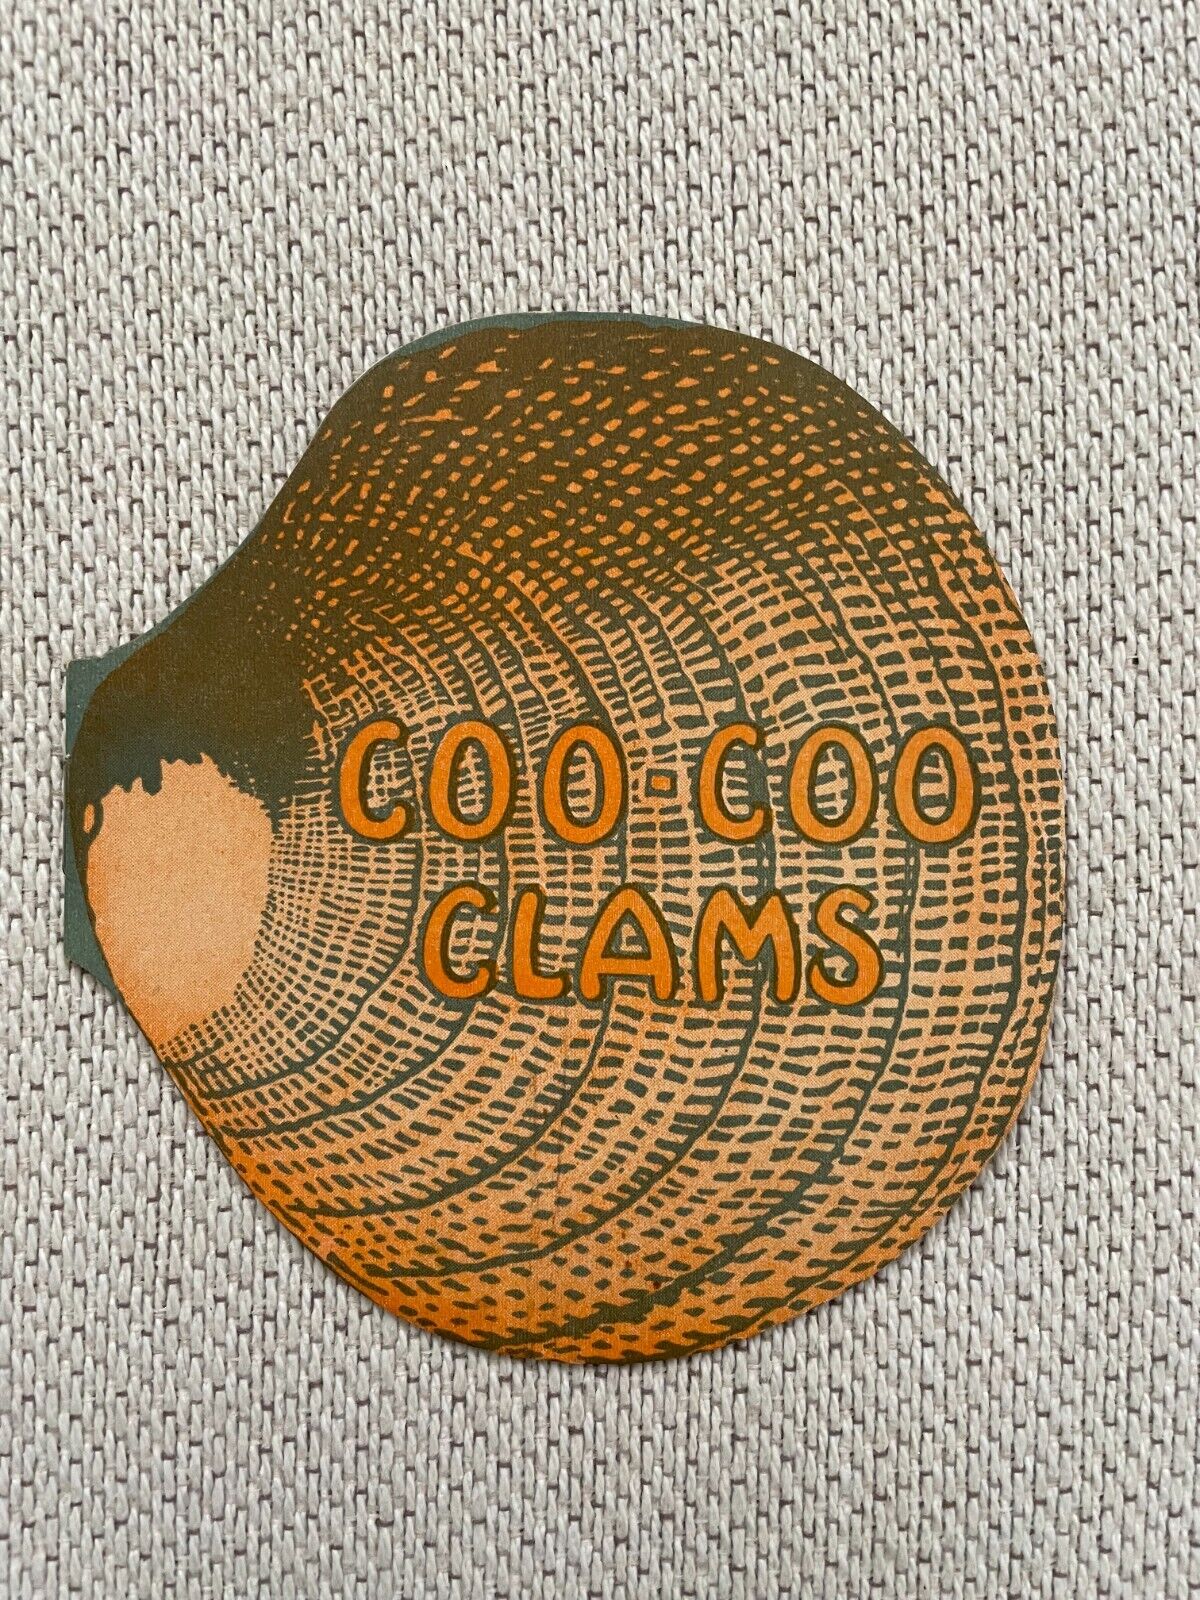 COO-COO CLAMS at Bernstein's Fish Grotto  - San Francisco, California, 1938